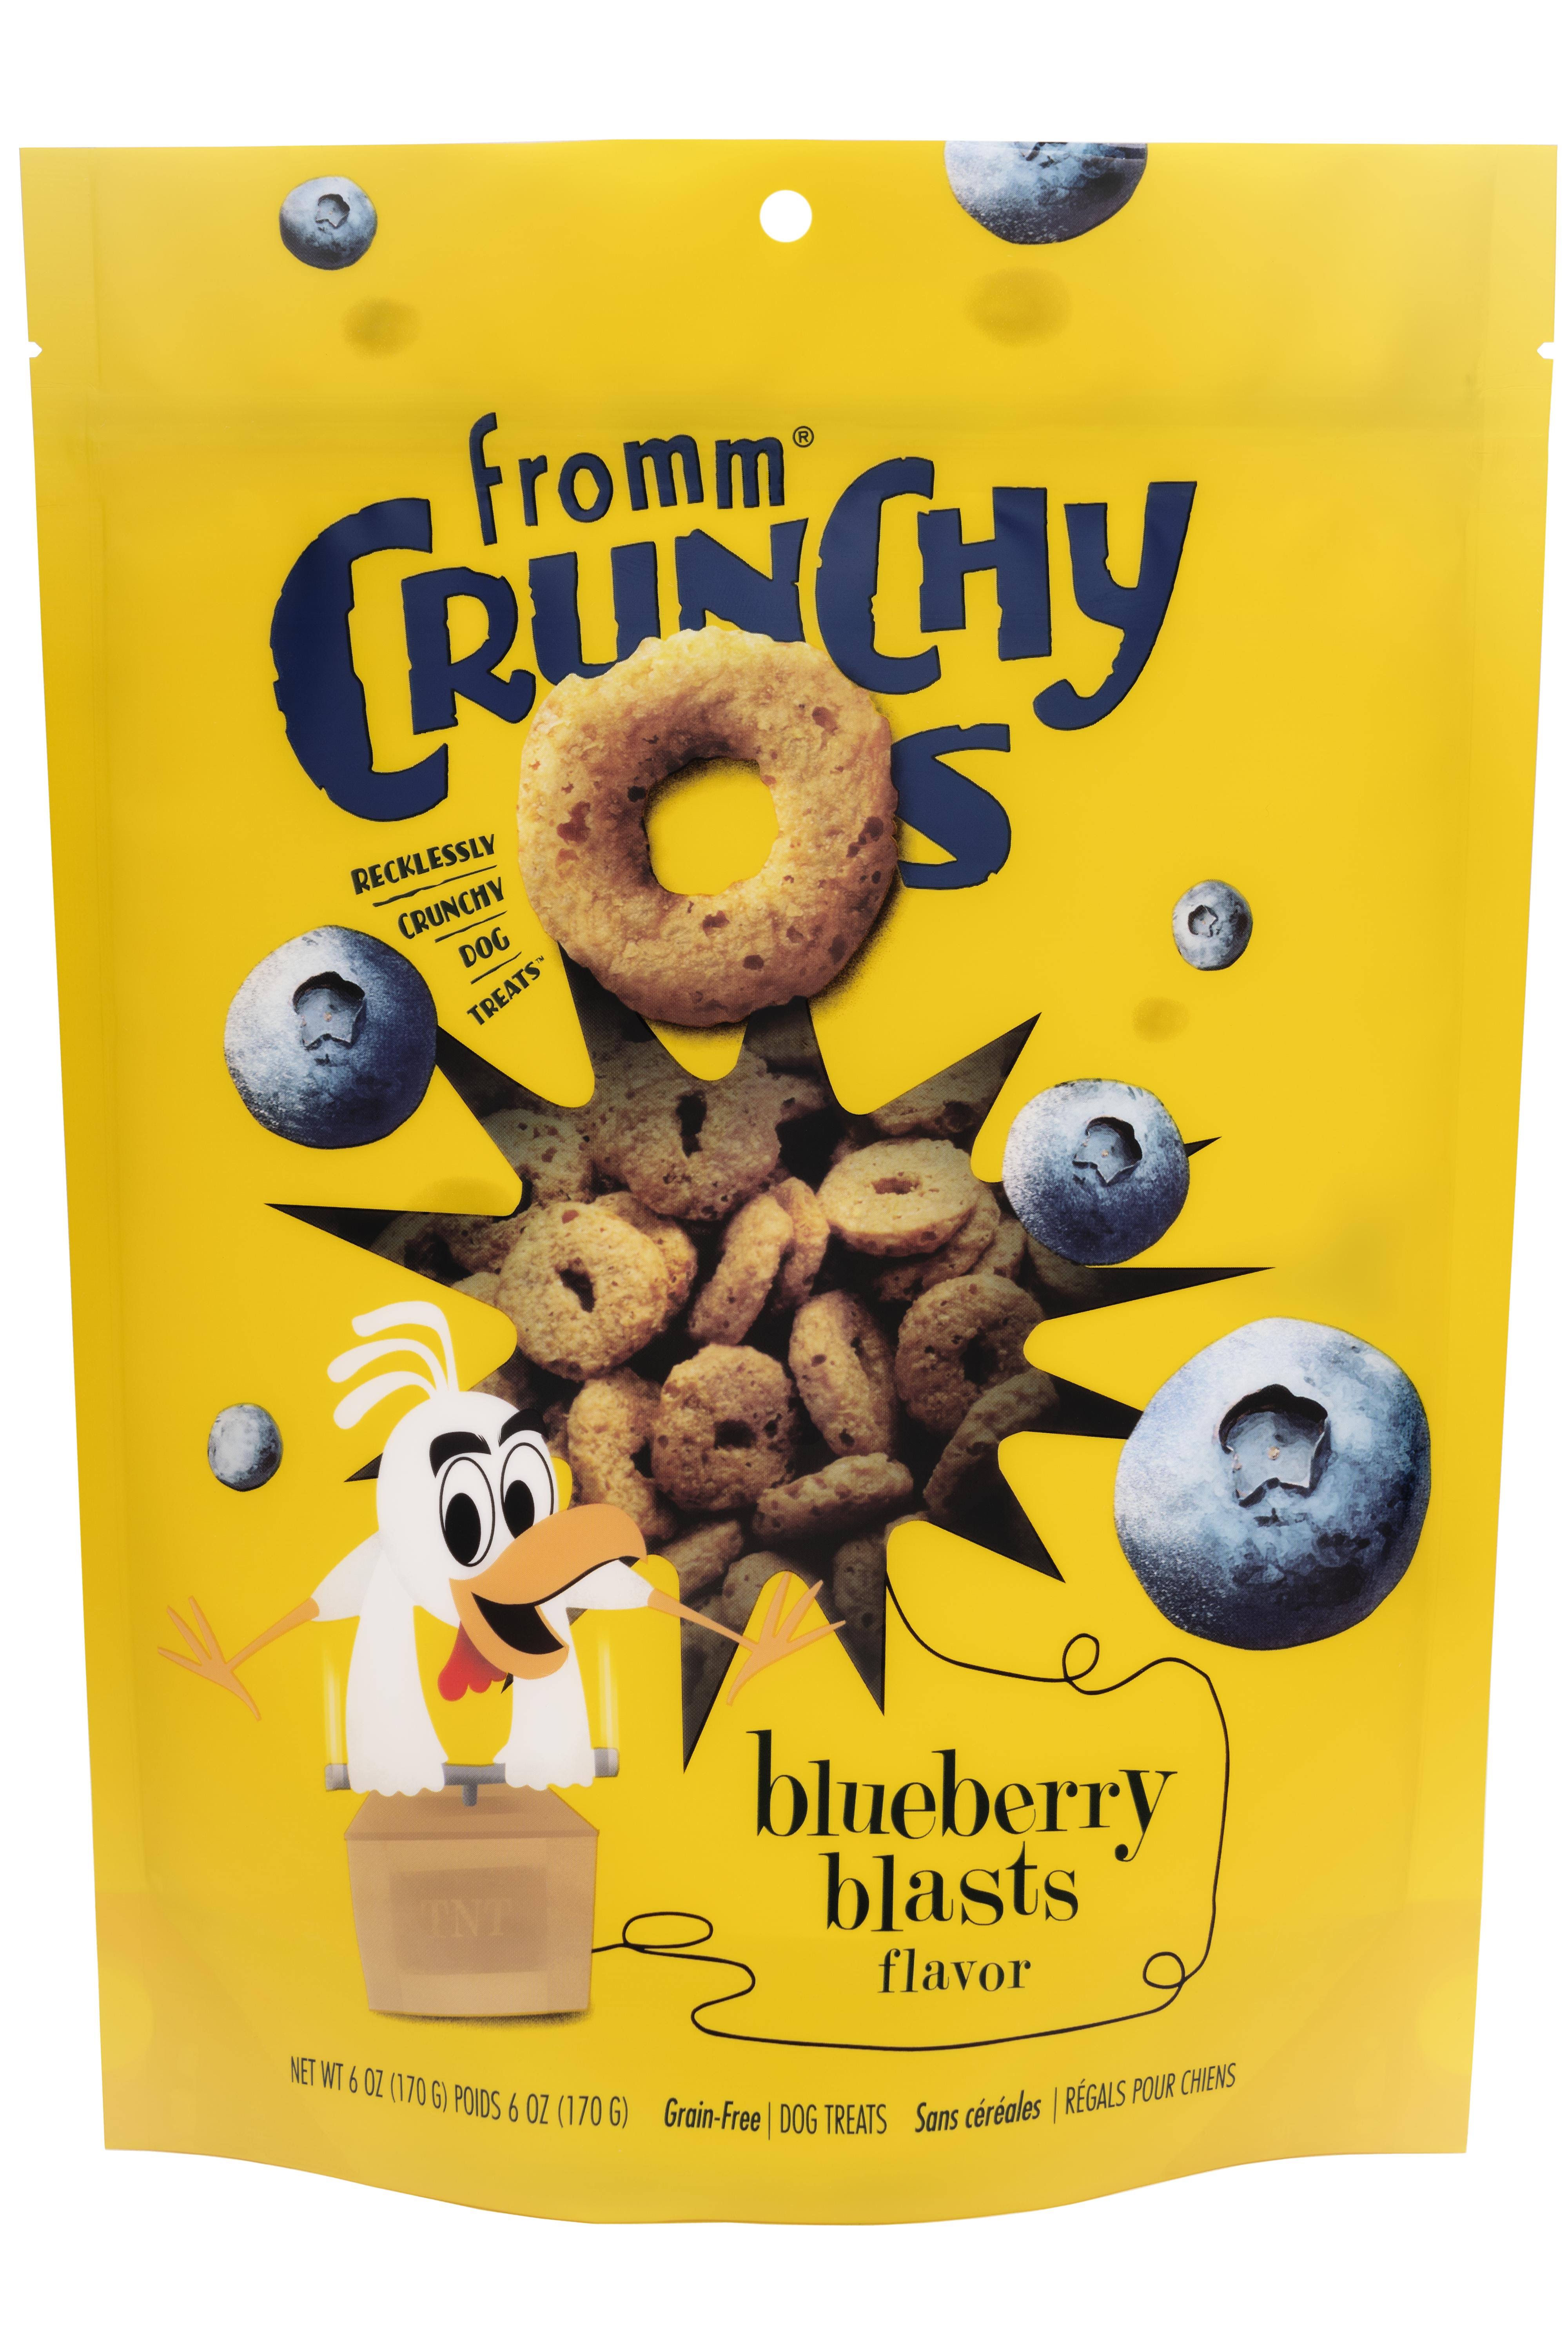 Fromm Crunchy O's Blueberry Blast 6 Oz.